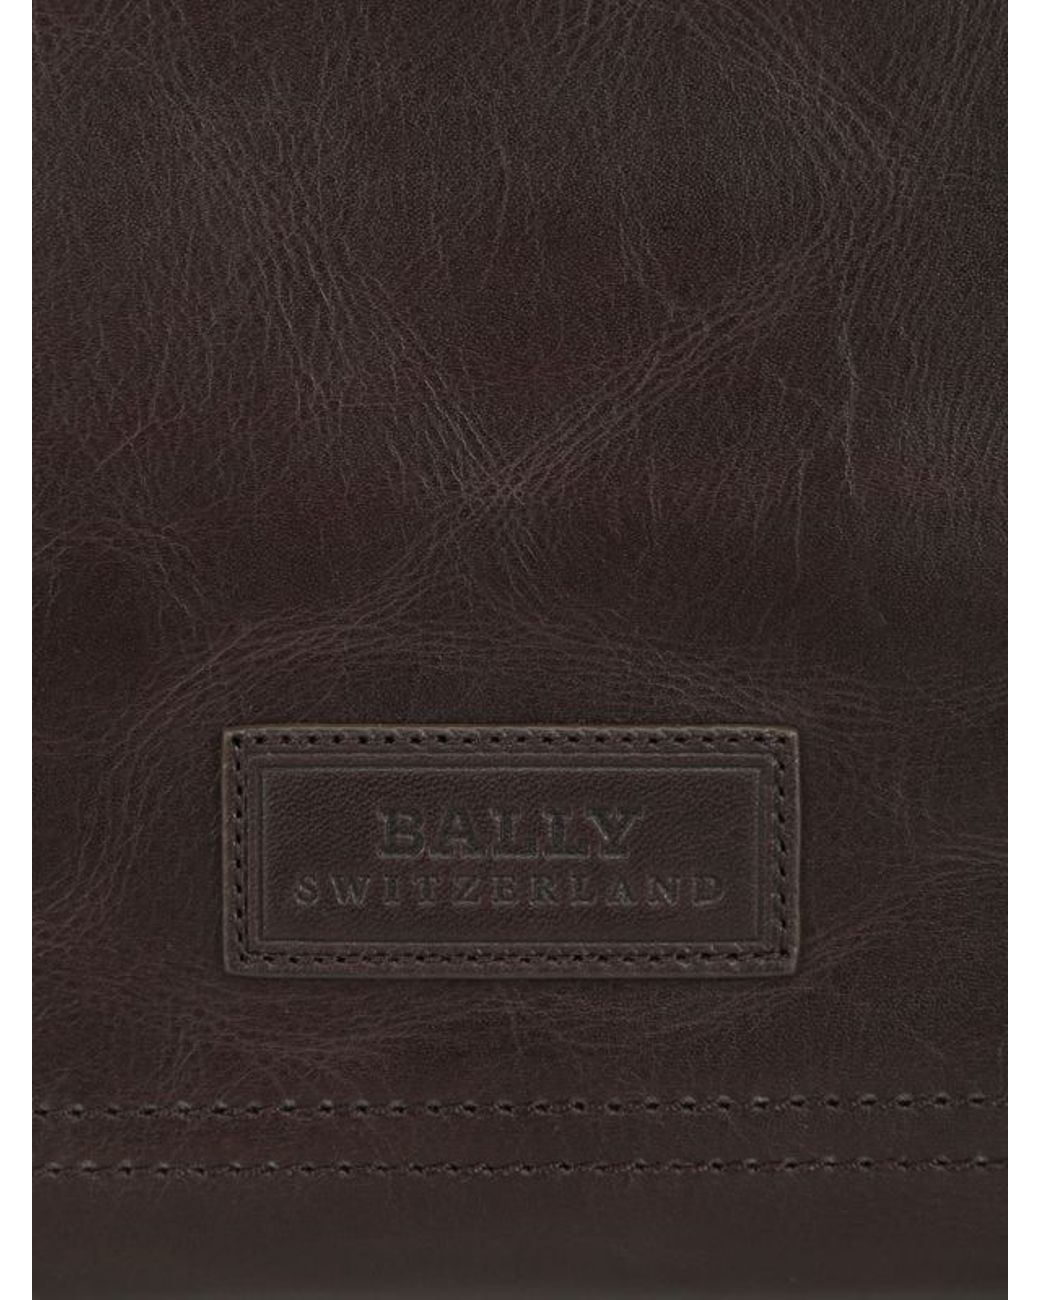 Bally 2way Brown Macy Sm.l Leather Bally Tote Bag Men's Women's Unisex